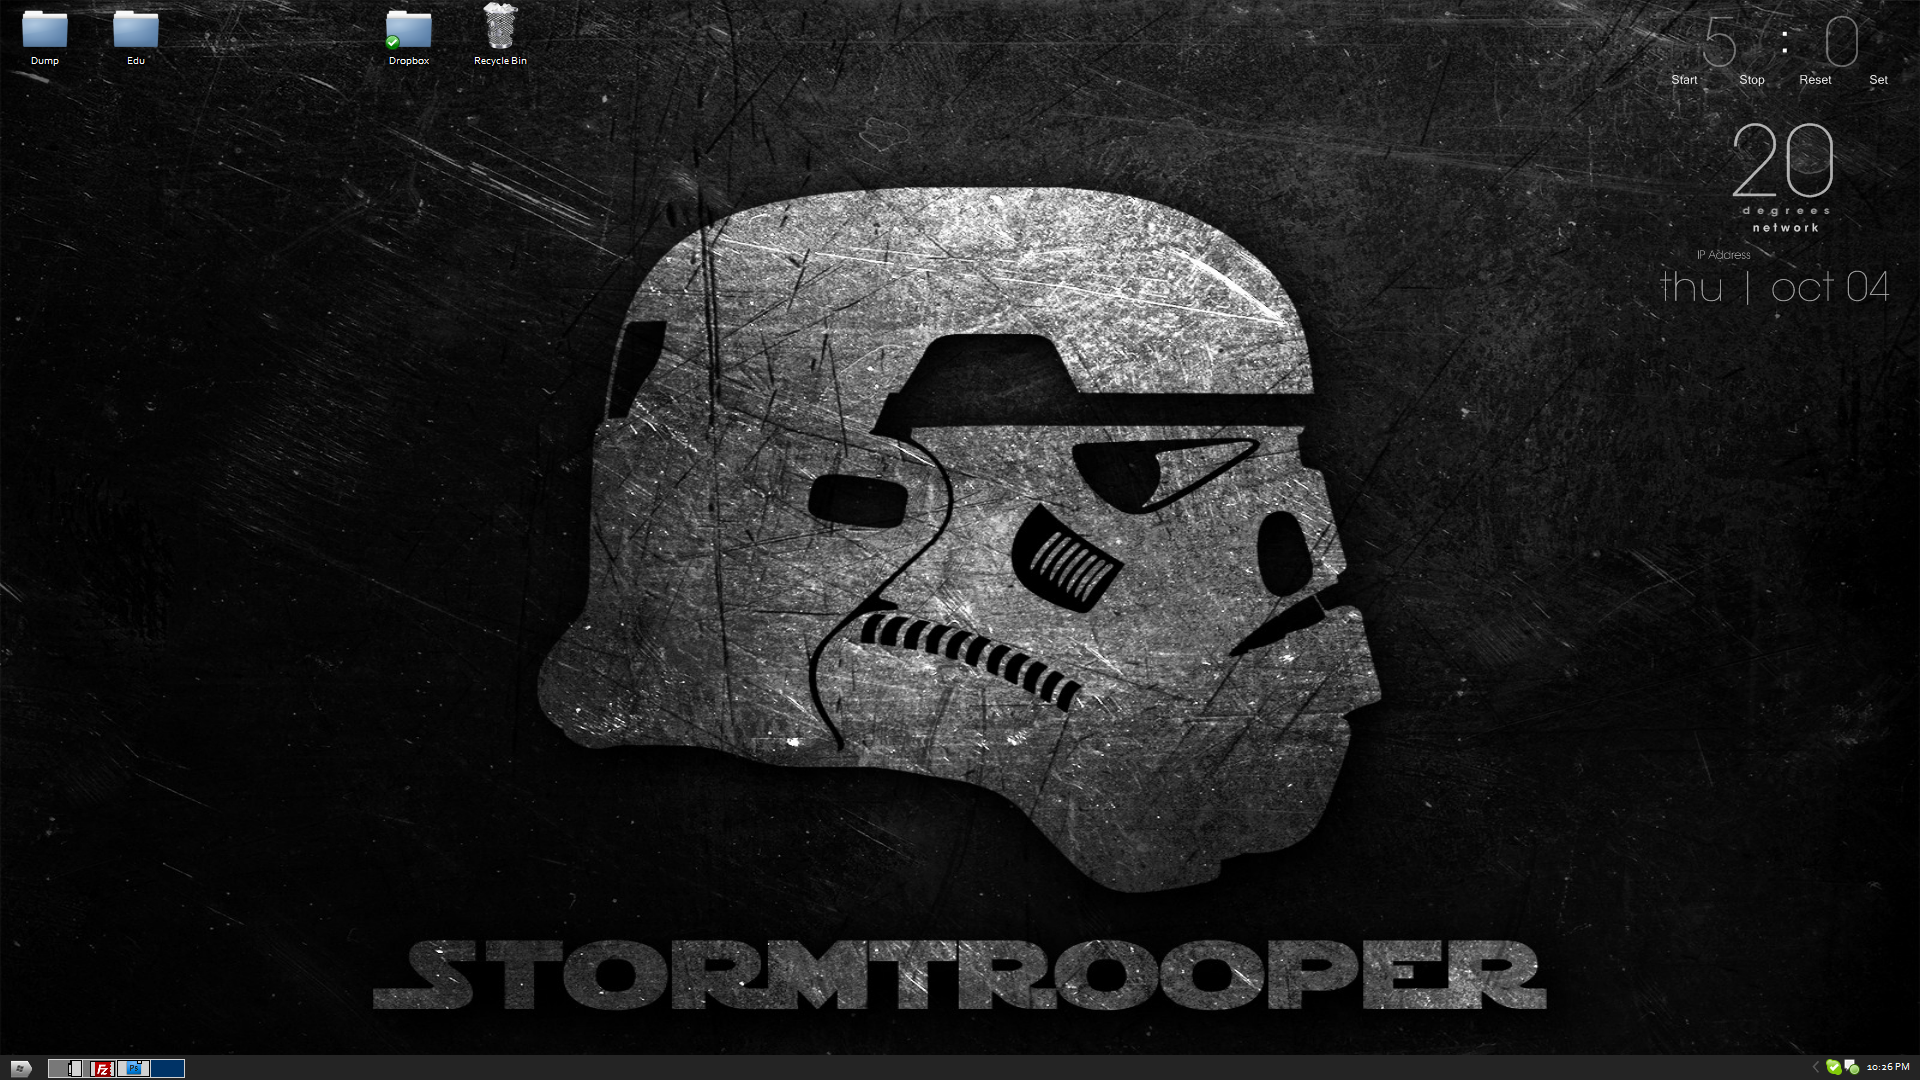 Stormtrooper Wallpaper